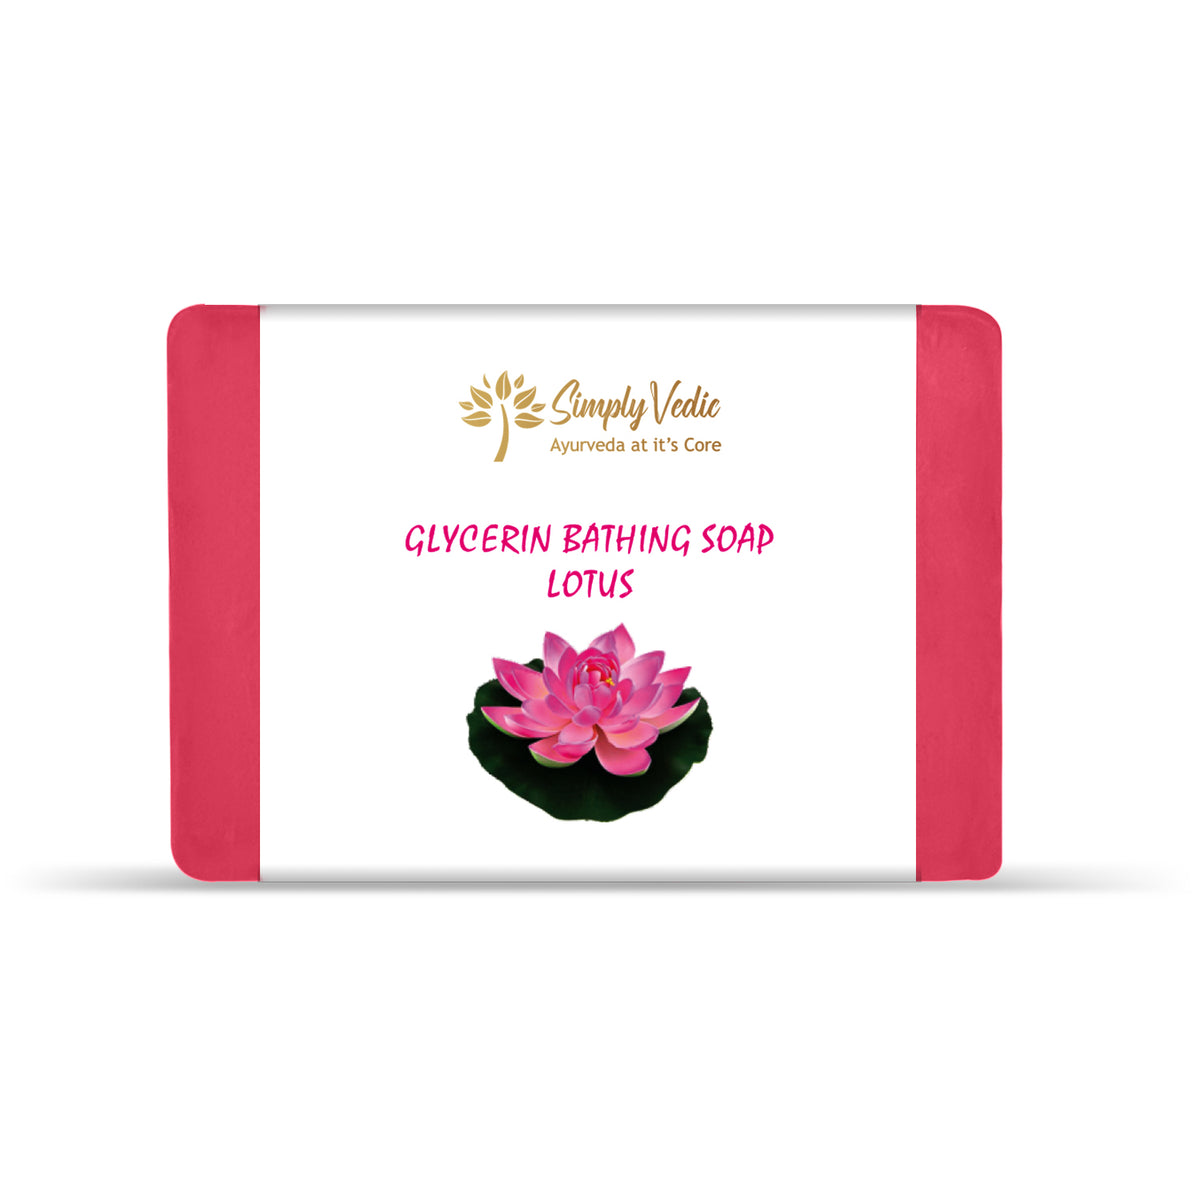 Simply Vedic's Lotus Glycerin Soap